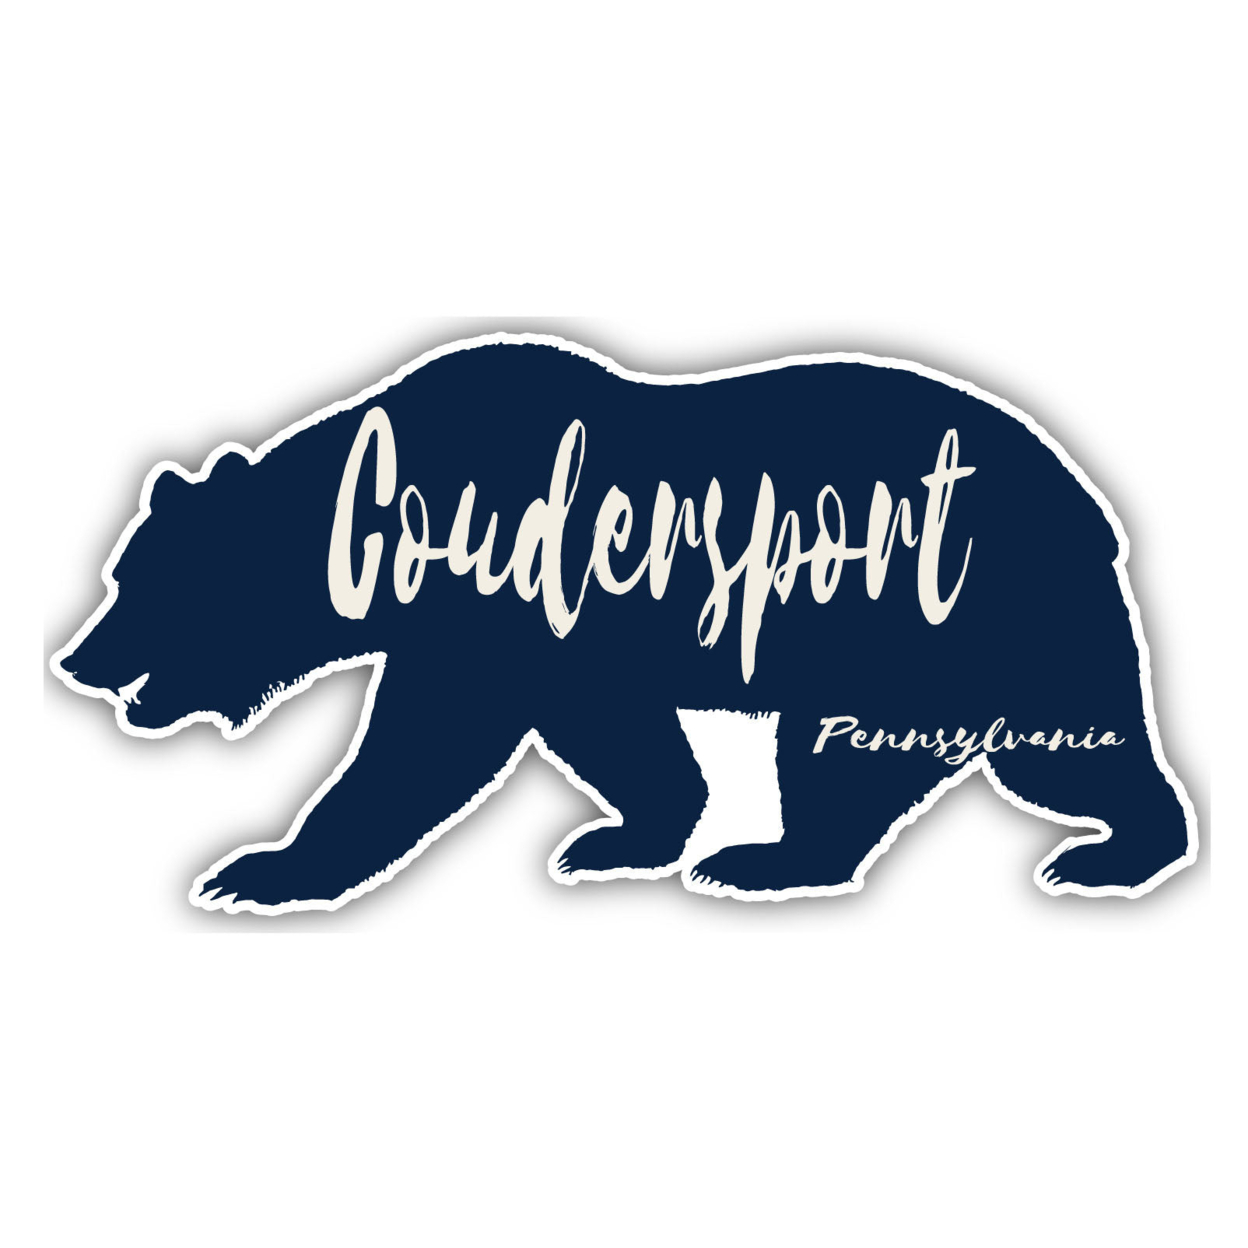 Coudersport Pennsylvania Souvenir Decorative Stickers (Choose Theme And Size) - Single Unit, 2-Inch, Bear